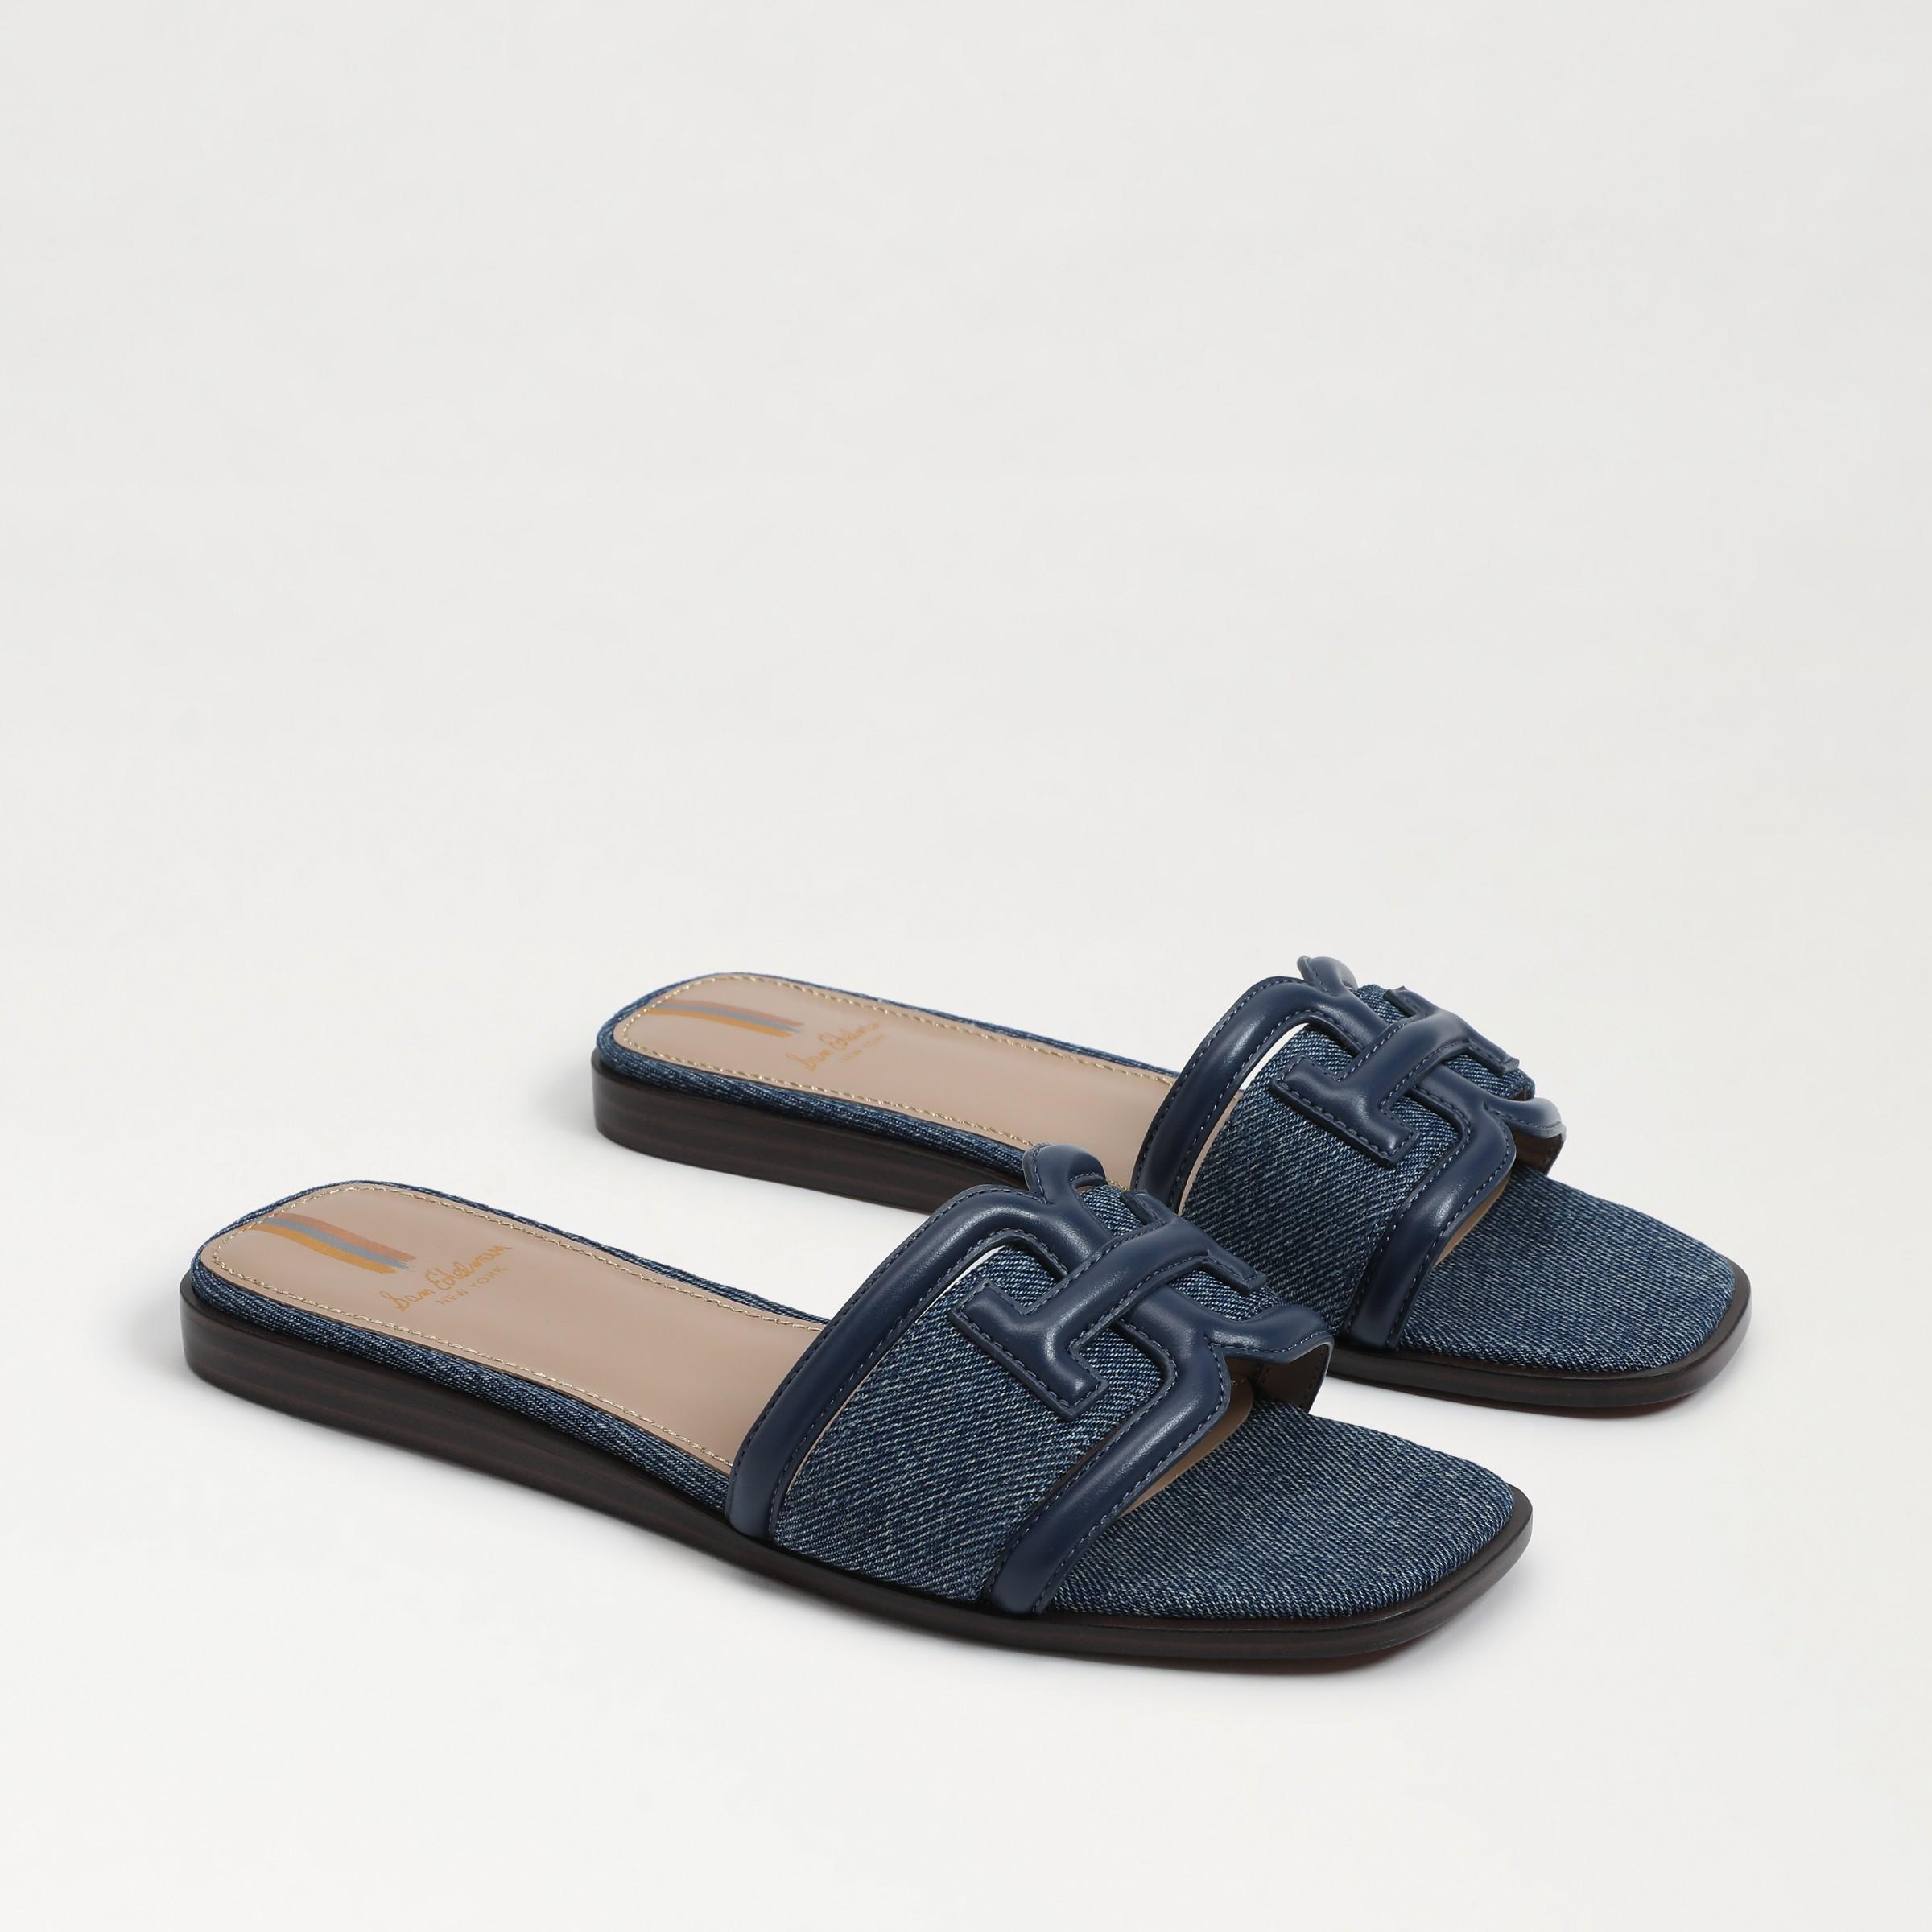 Sam Edelman Irina Denim Double E Square Toe Flat Slide Sandals Product Image